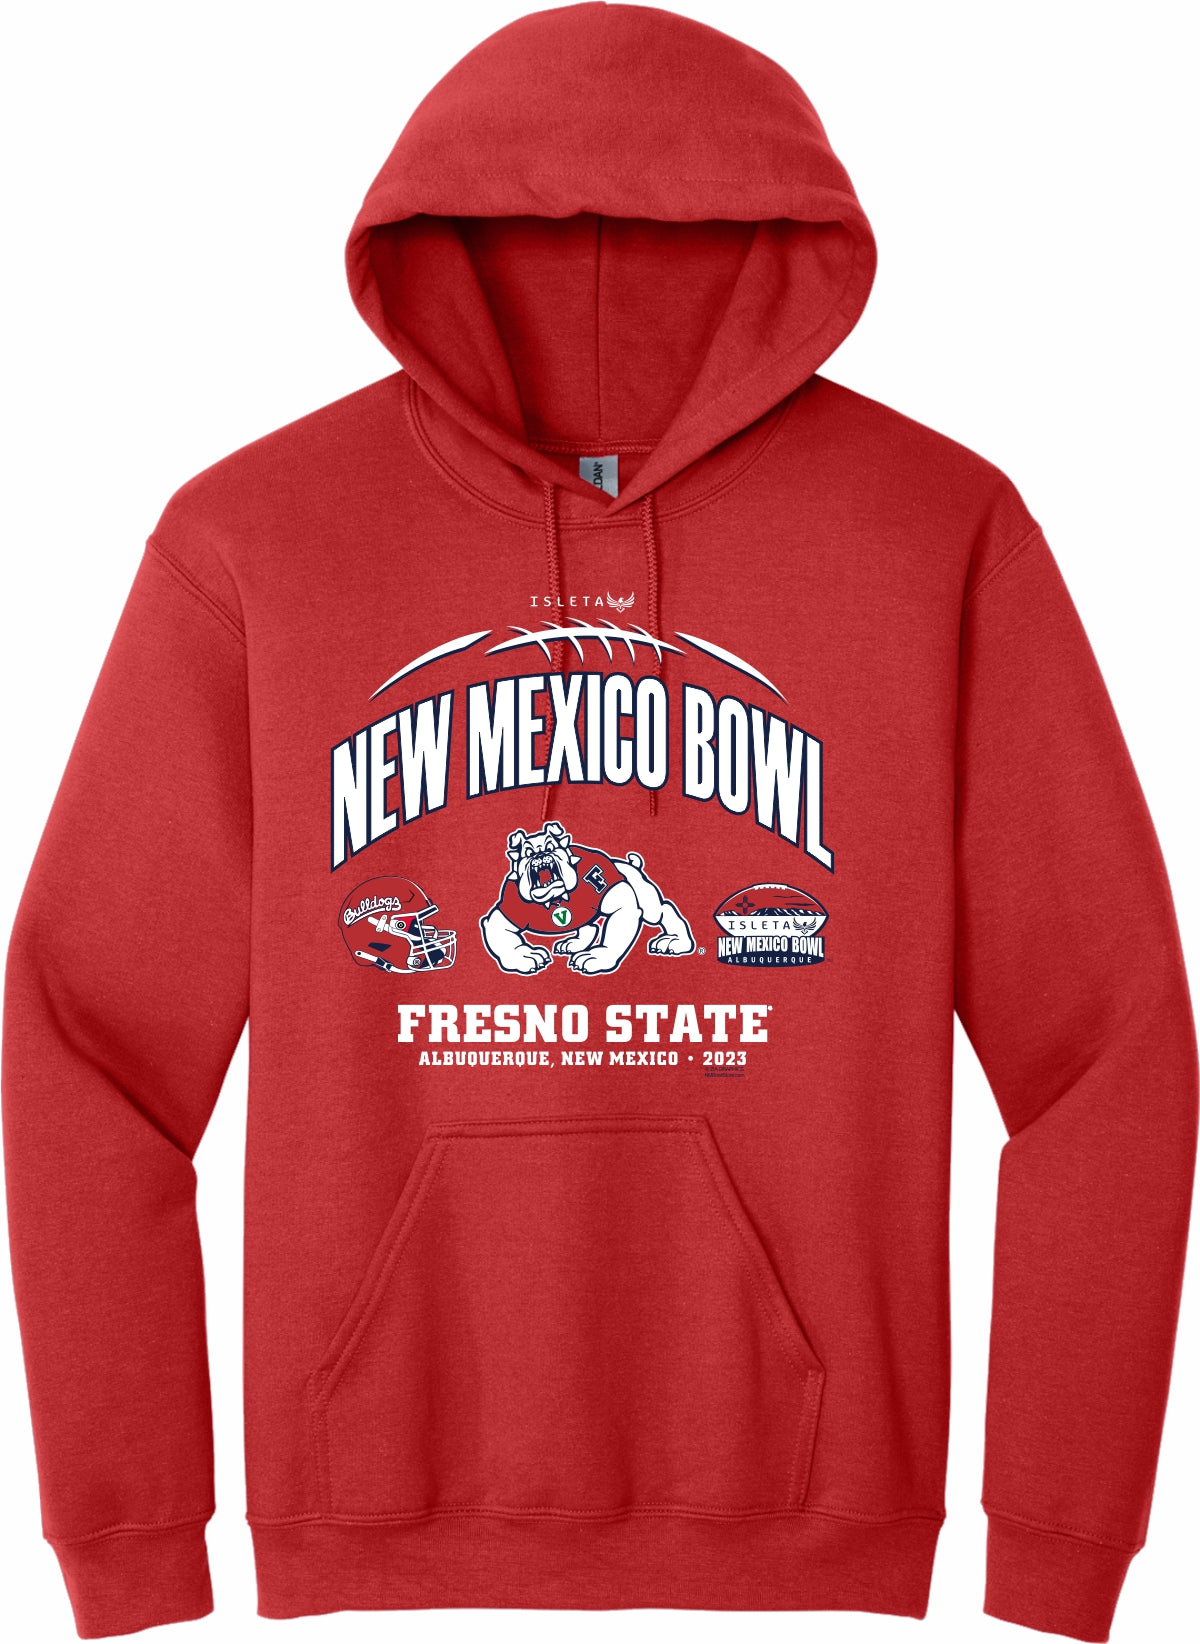 2023 New Mexico Bowl Fresno State Hood